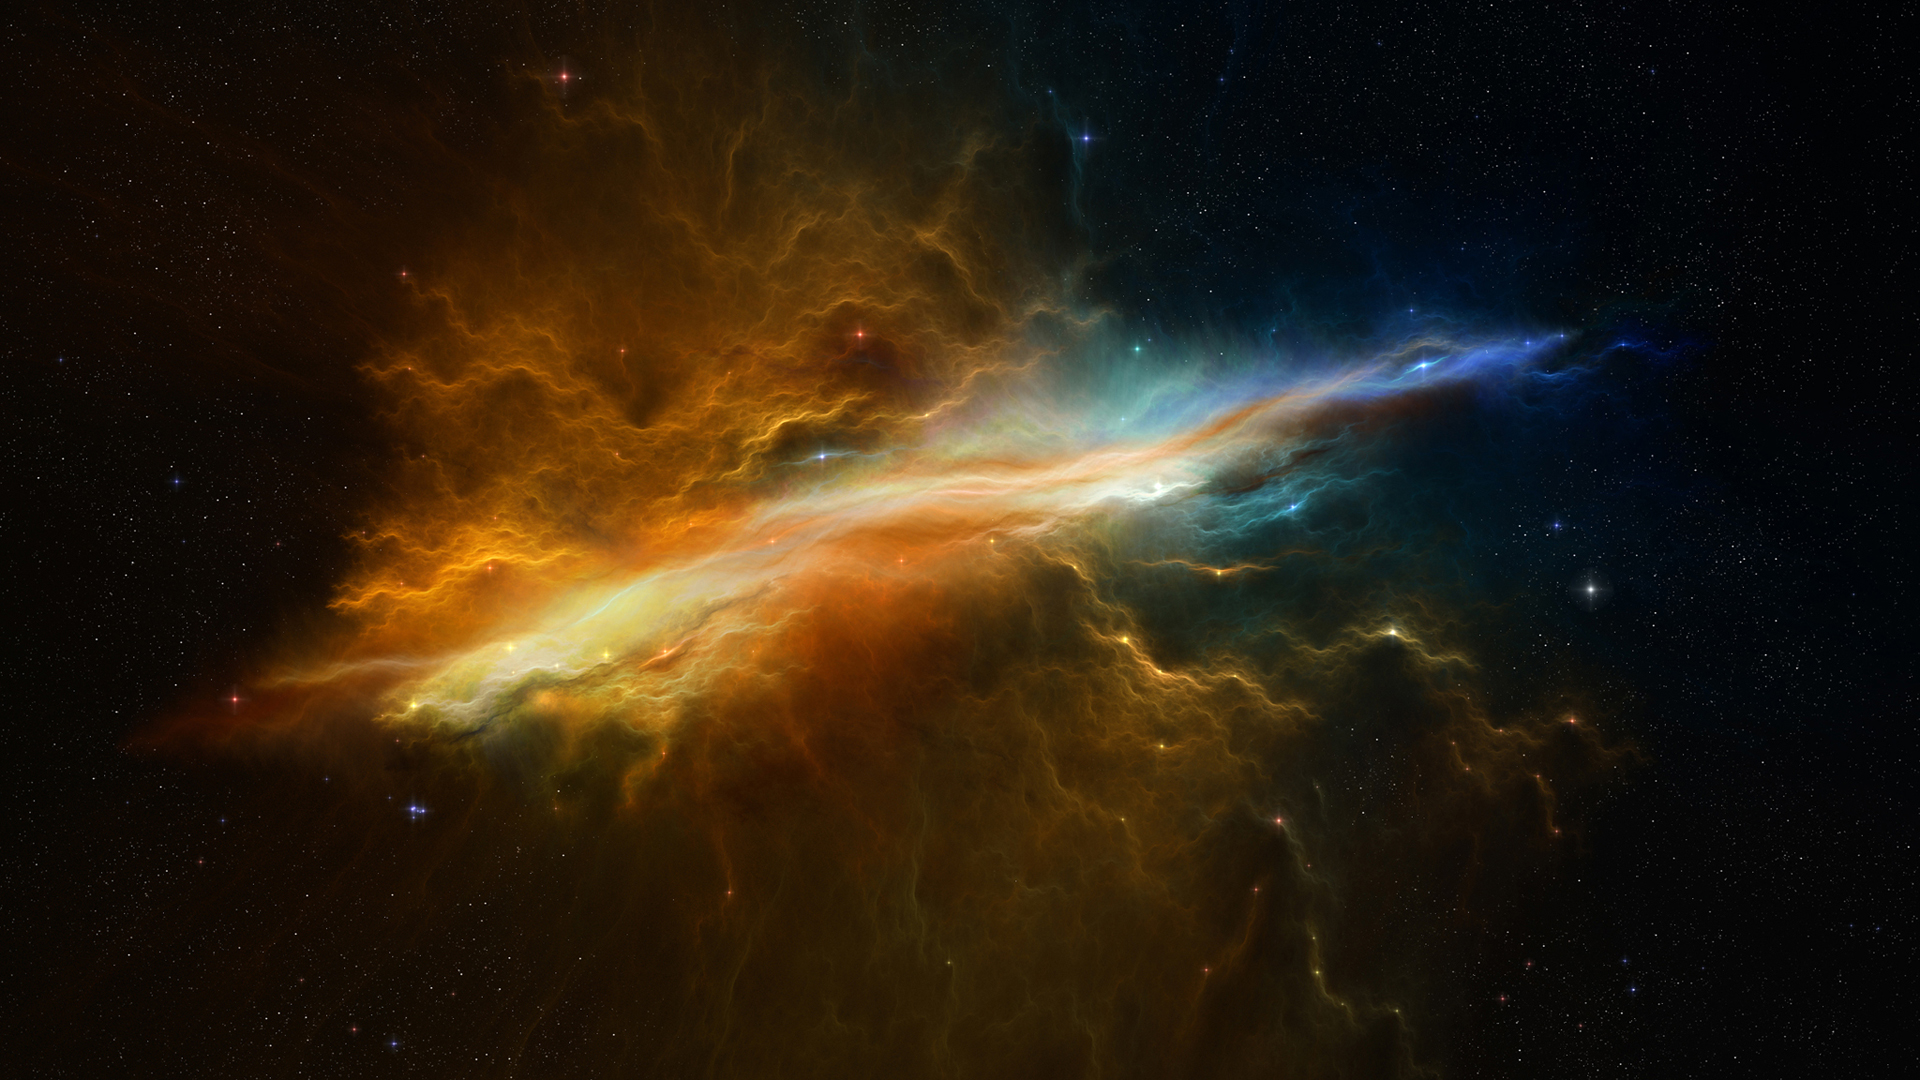 3D Space Galaxy Nebula Space Art 1920x1080